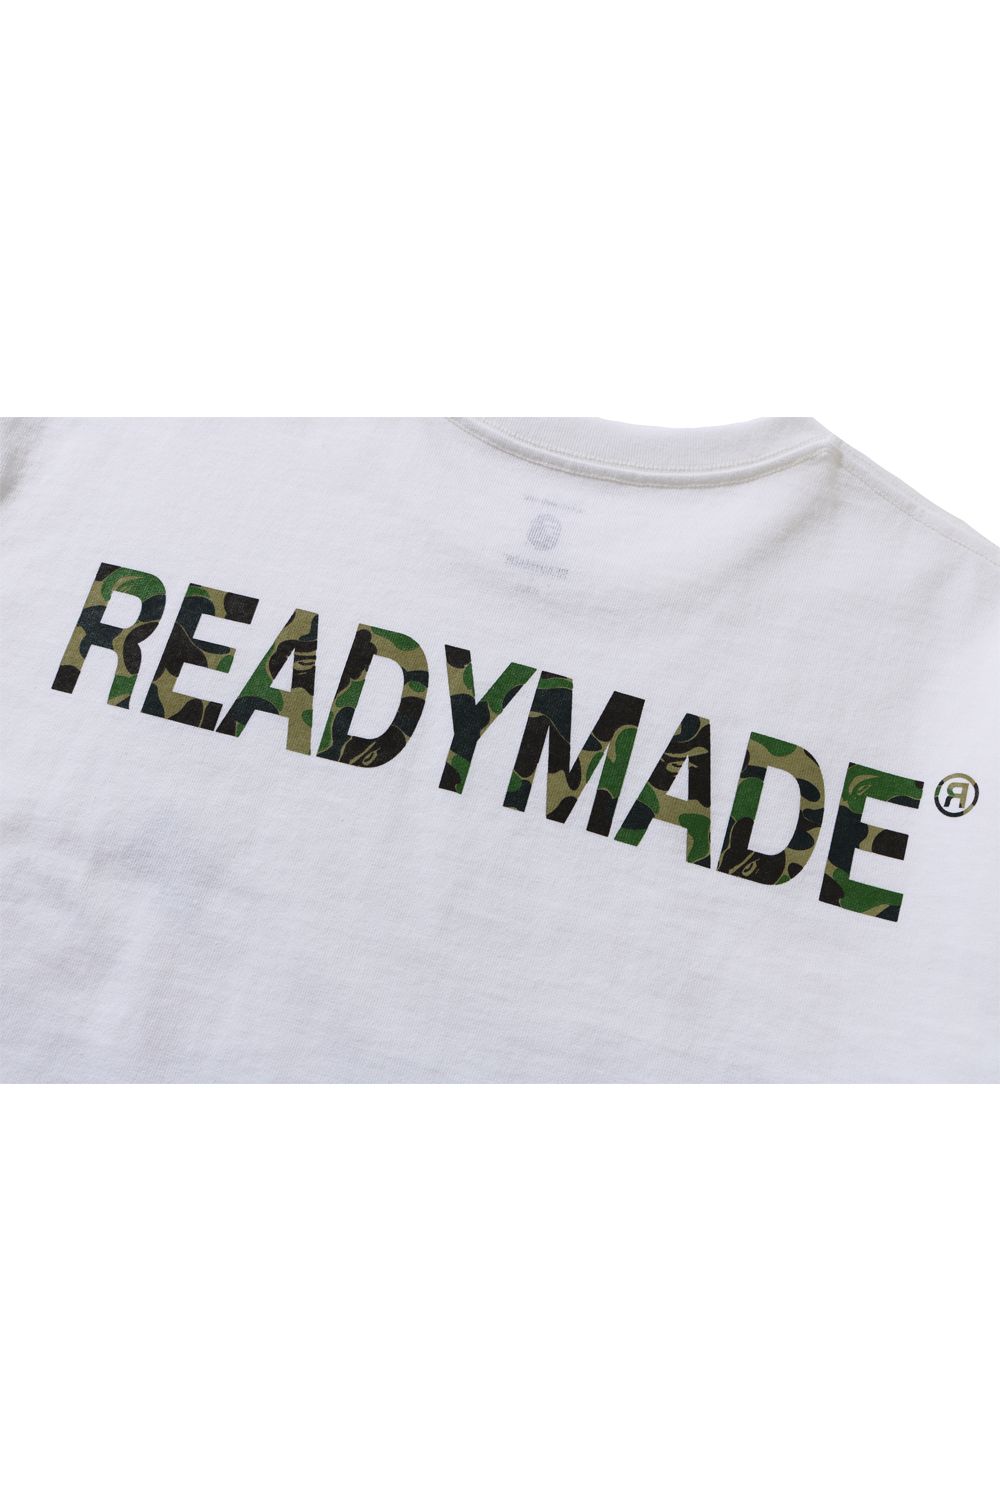 READYMADE - READYMADE × A BATHING APE ® 3 PACK TEE / レディメイド ...